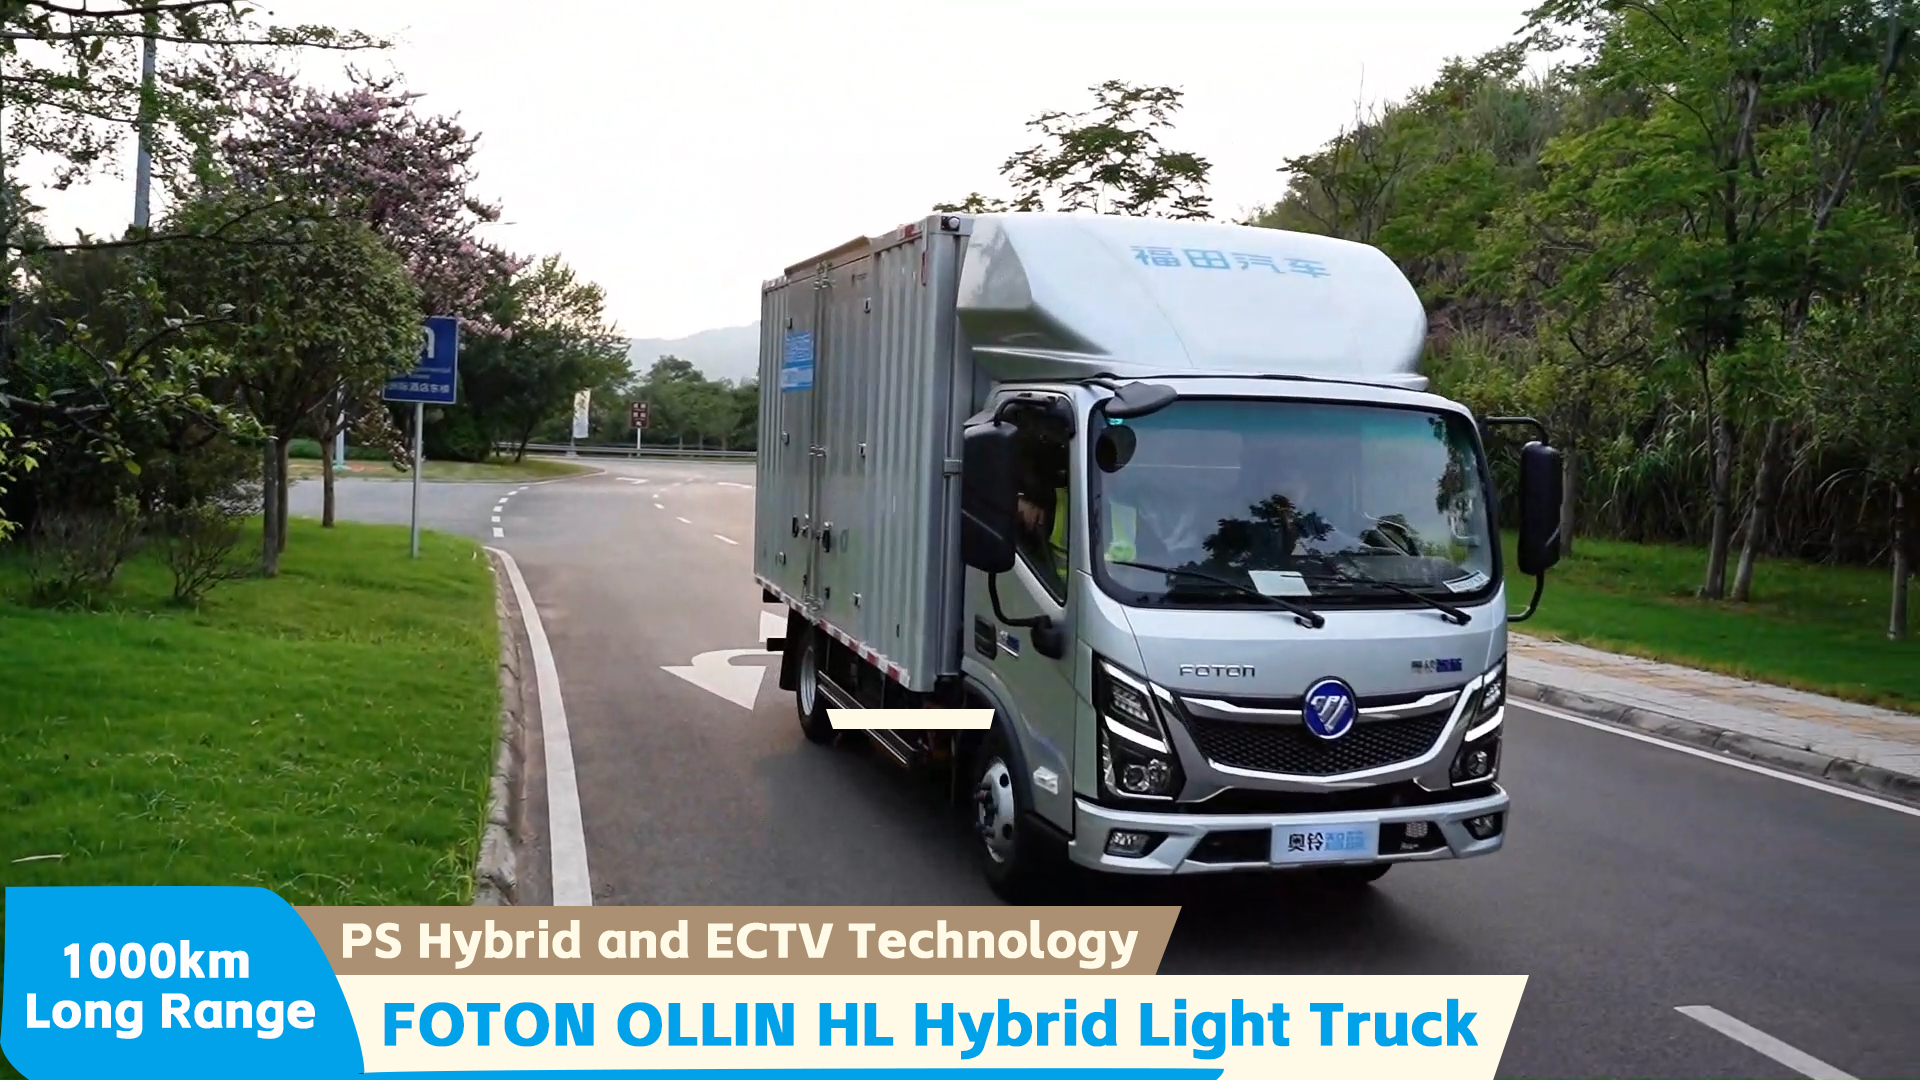 FOTON OLLIN HL Hybrid Light Truck